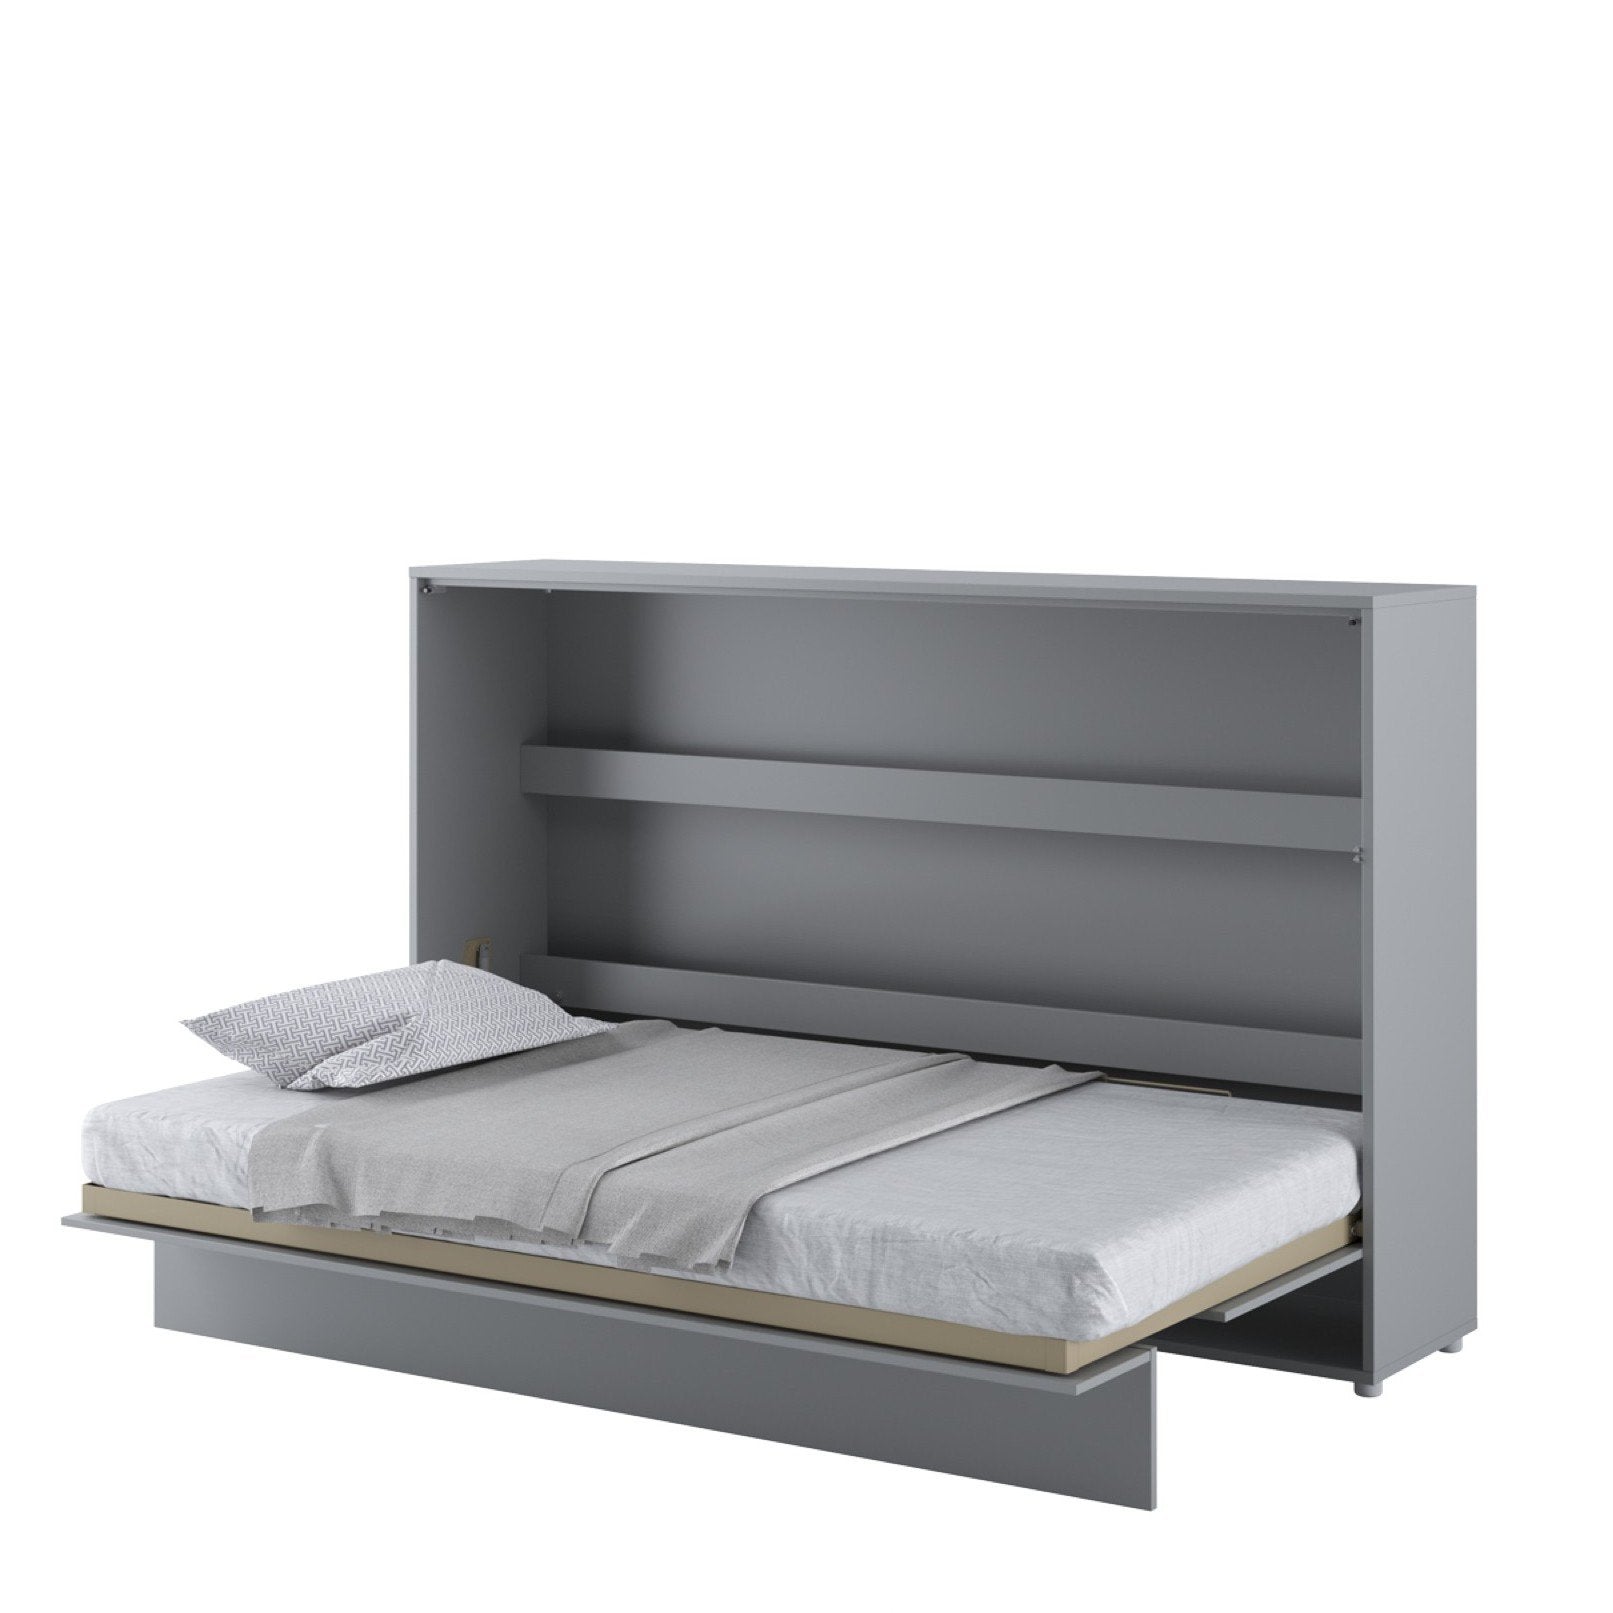 View BC05 Horizontal Wall Bed Concept 120cm Murphy Bed Grey Matt 120 x 200cm information